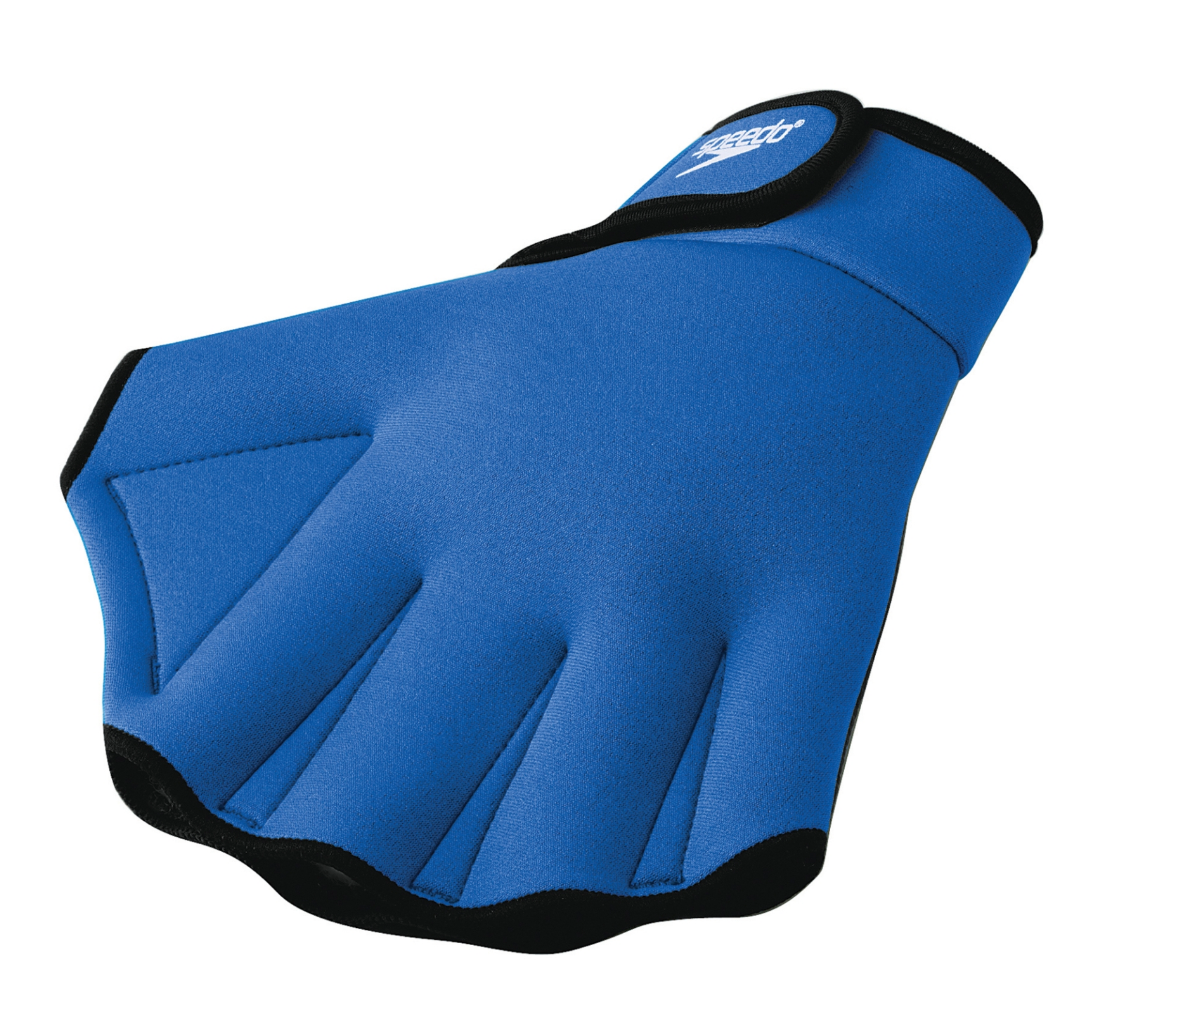 Aquatic Fitness Glove